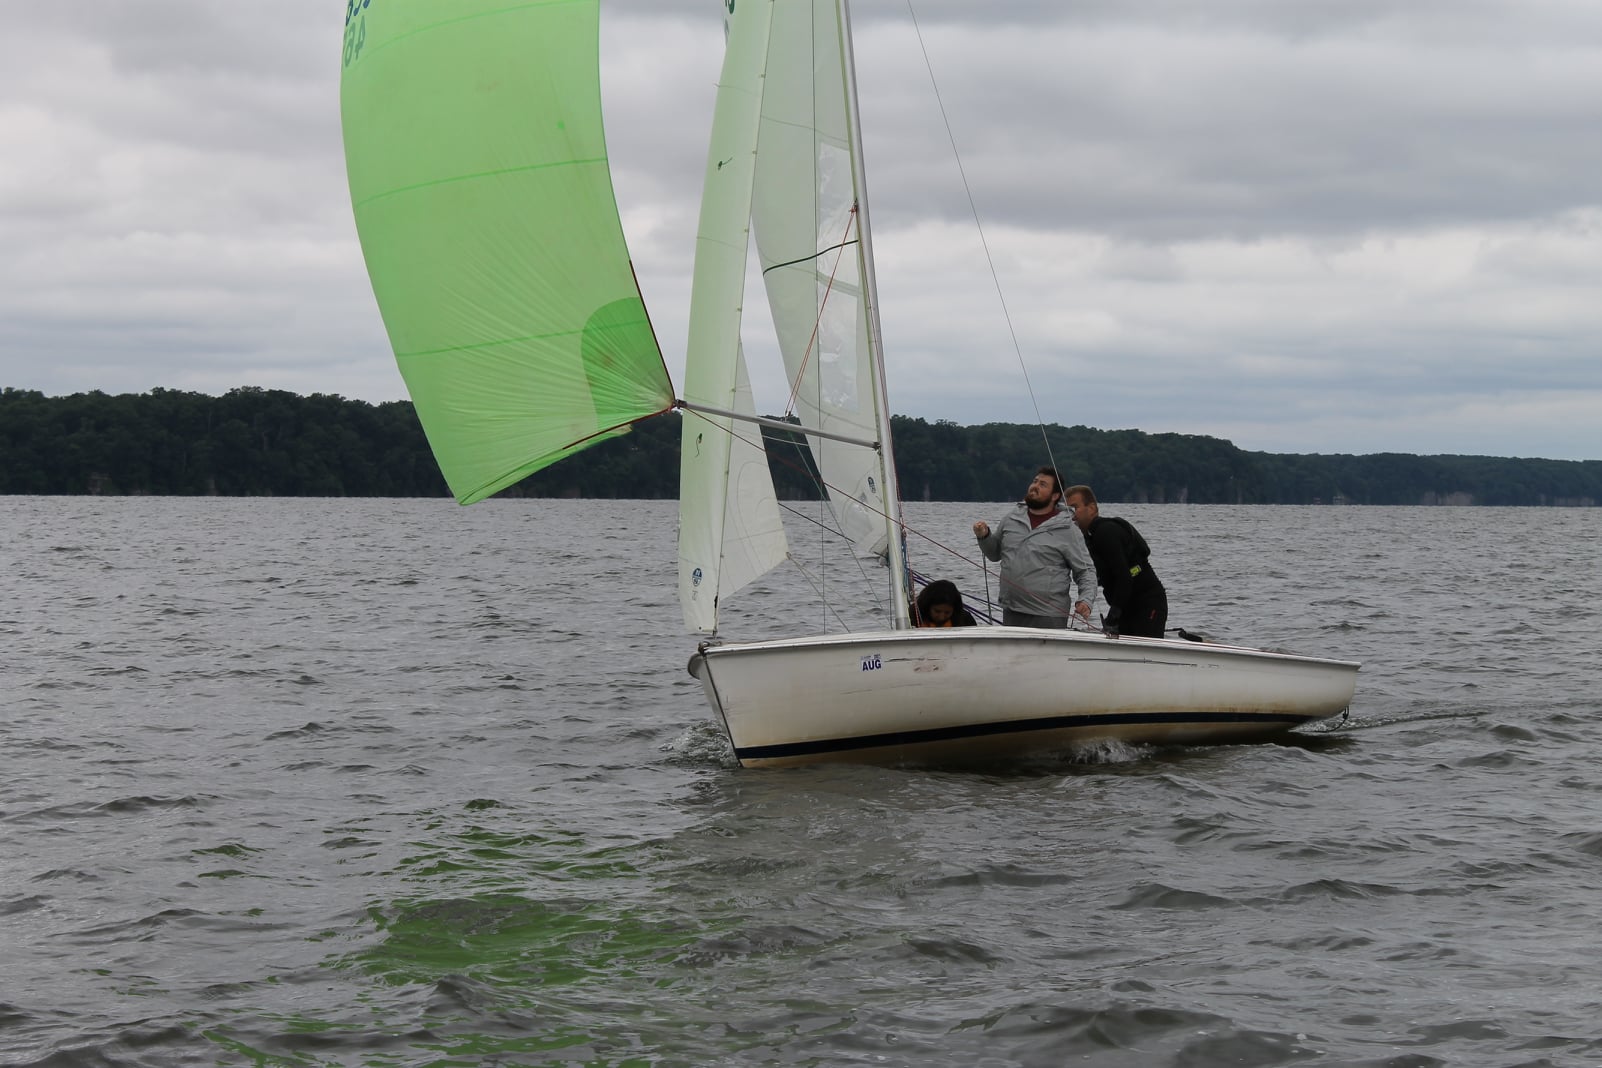 Kyle and his partner sailing a boat. 